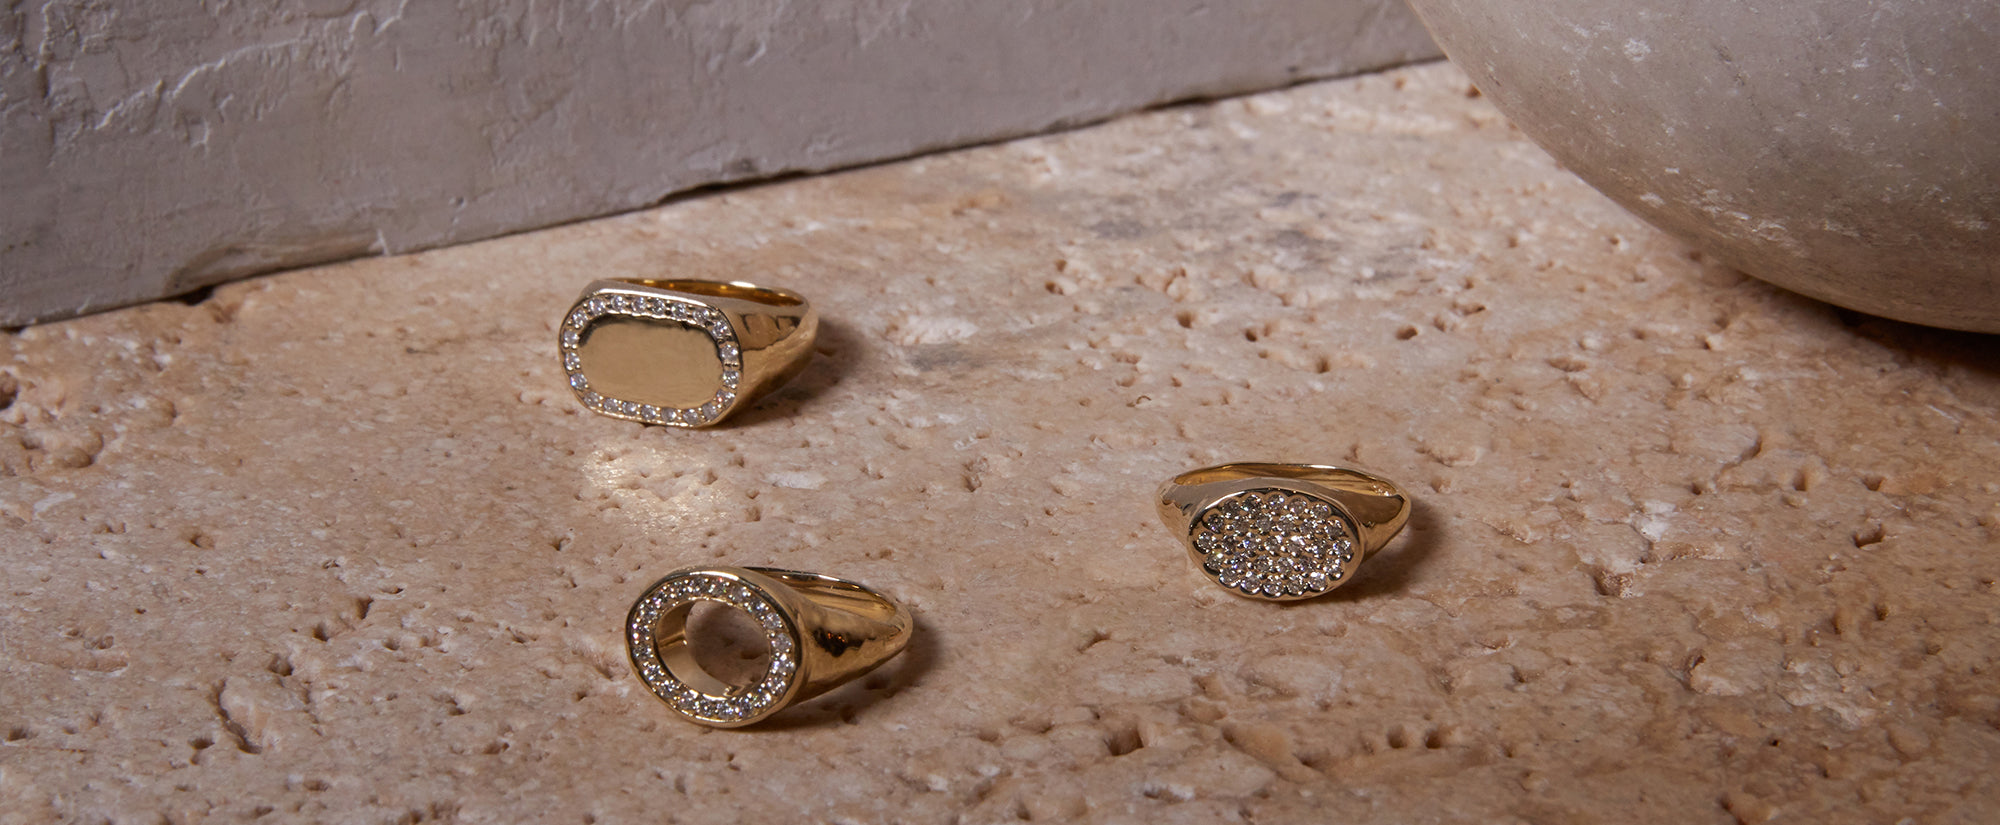 gold diamond signet rings family heirlooms